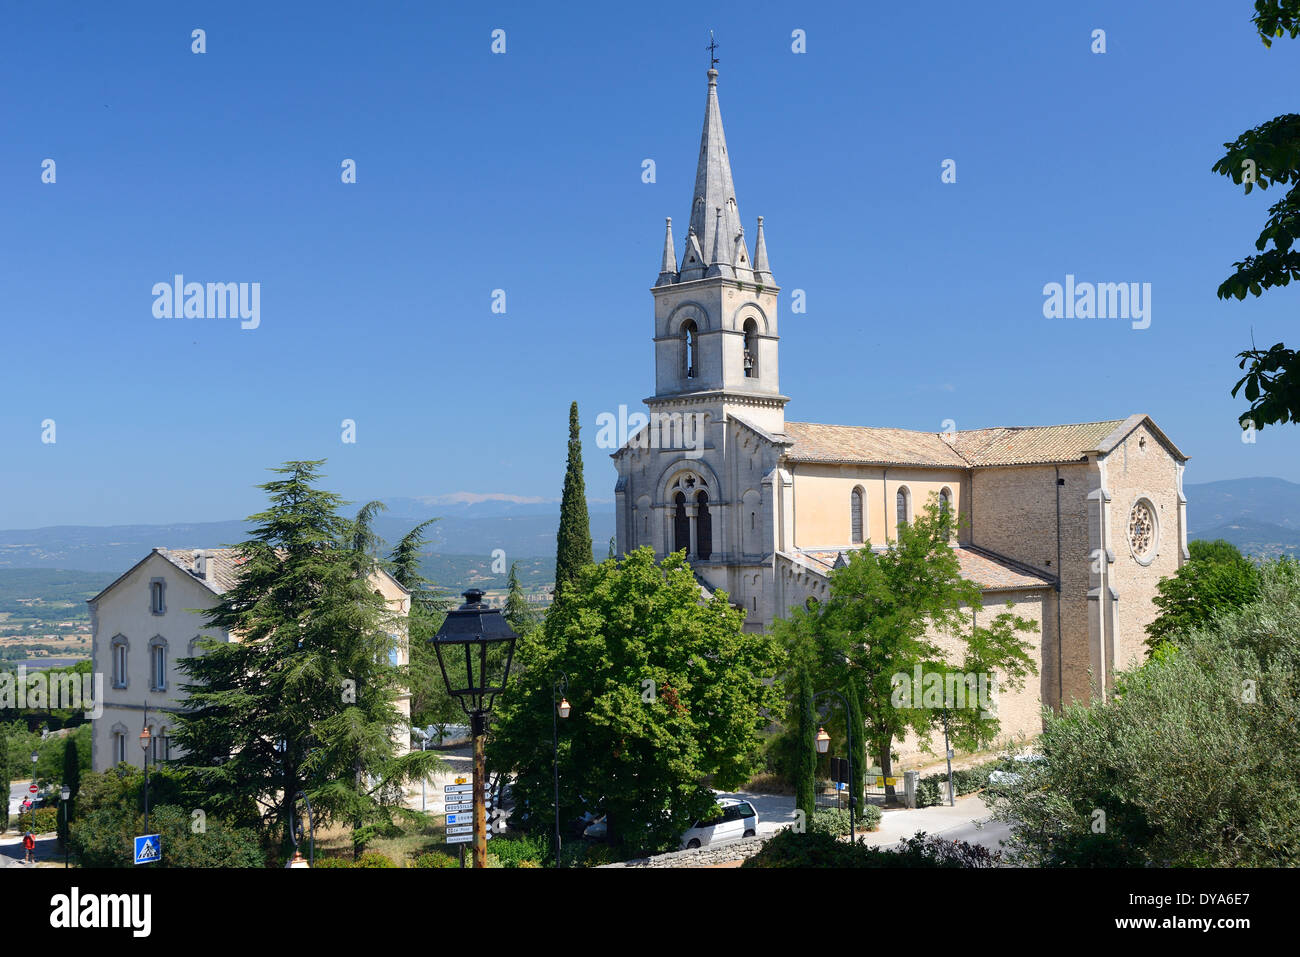 Europa, Frankreich, Provence, Vaucluse, Goult, Kirche, Gebäude Stockfoto